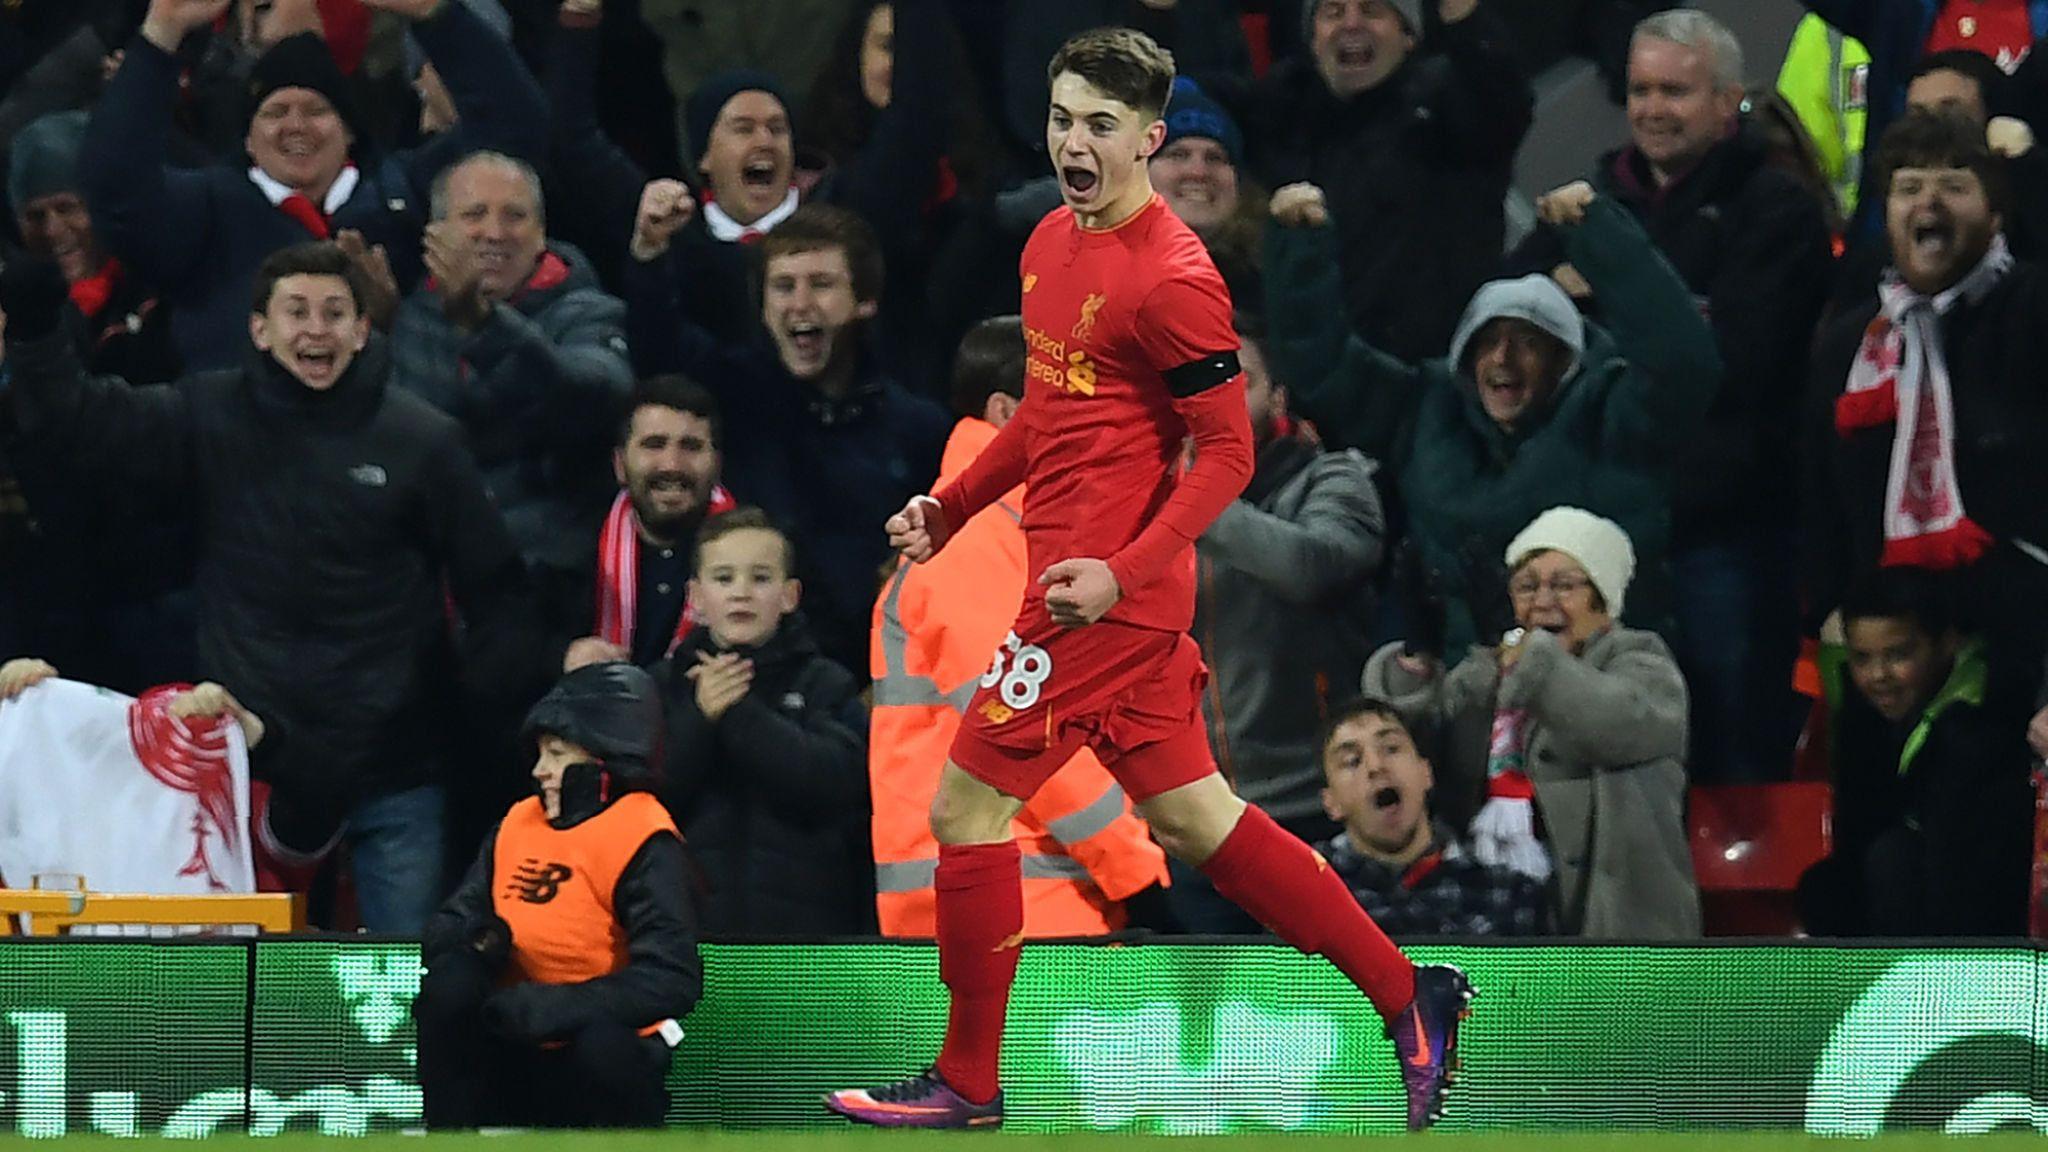 WATCH: Ben Woodburn becomes Liverpool's youngest goalscorer